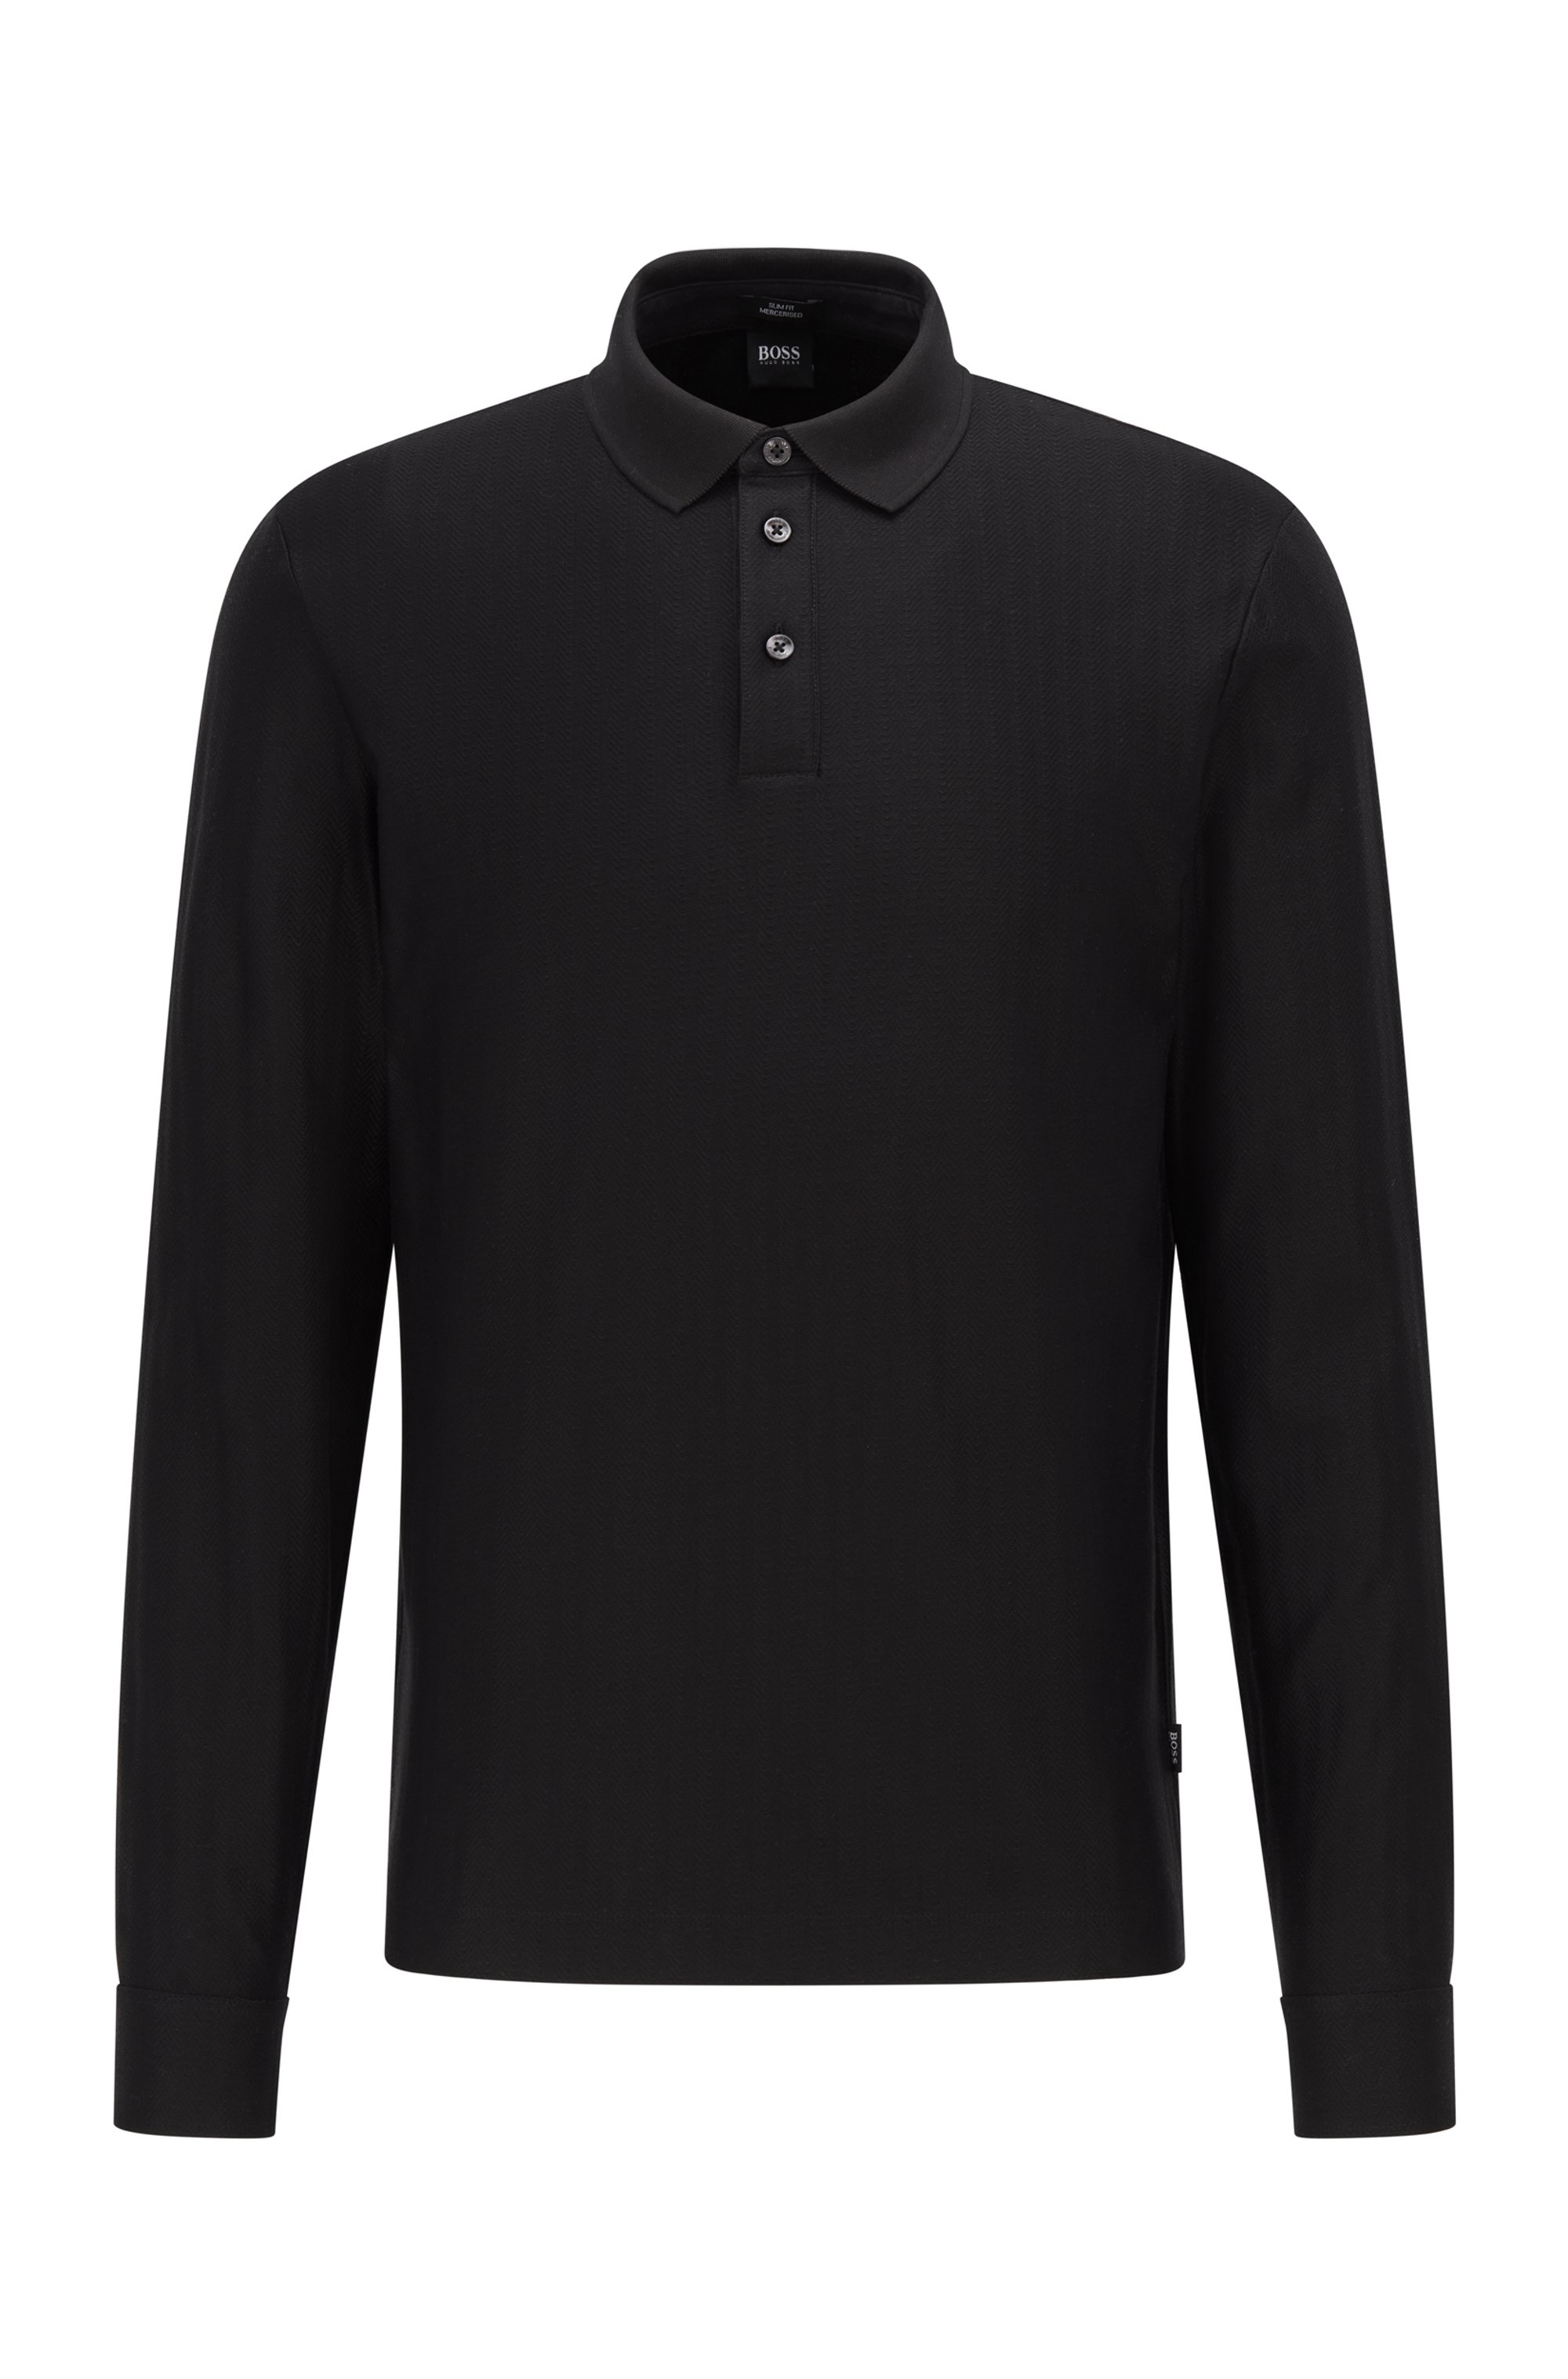 Slim-fit polo shirt in herringbone-structured mercerized cotton, Black